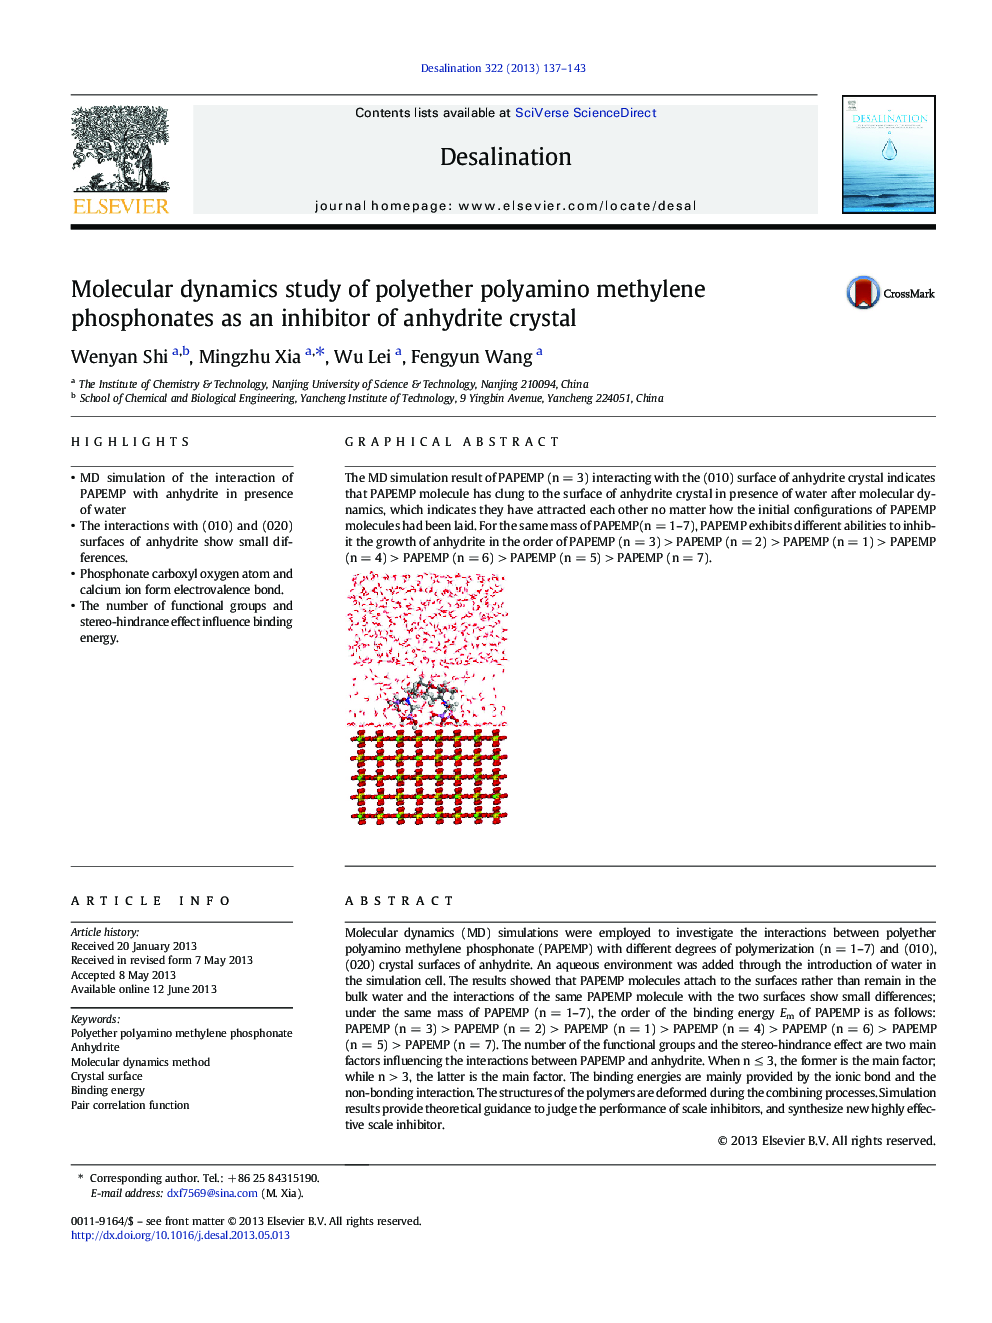 Molecular dynamics study of polyether polyamino methylene phosphonates as an inhibitor of anhydrite crystal